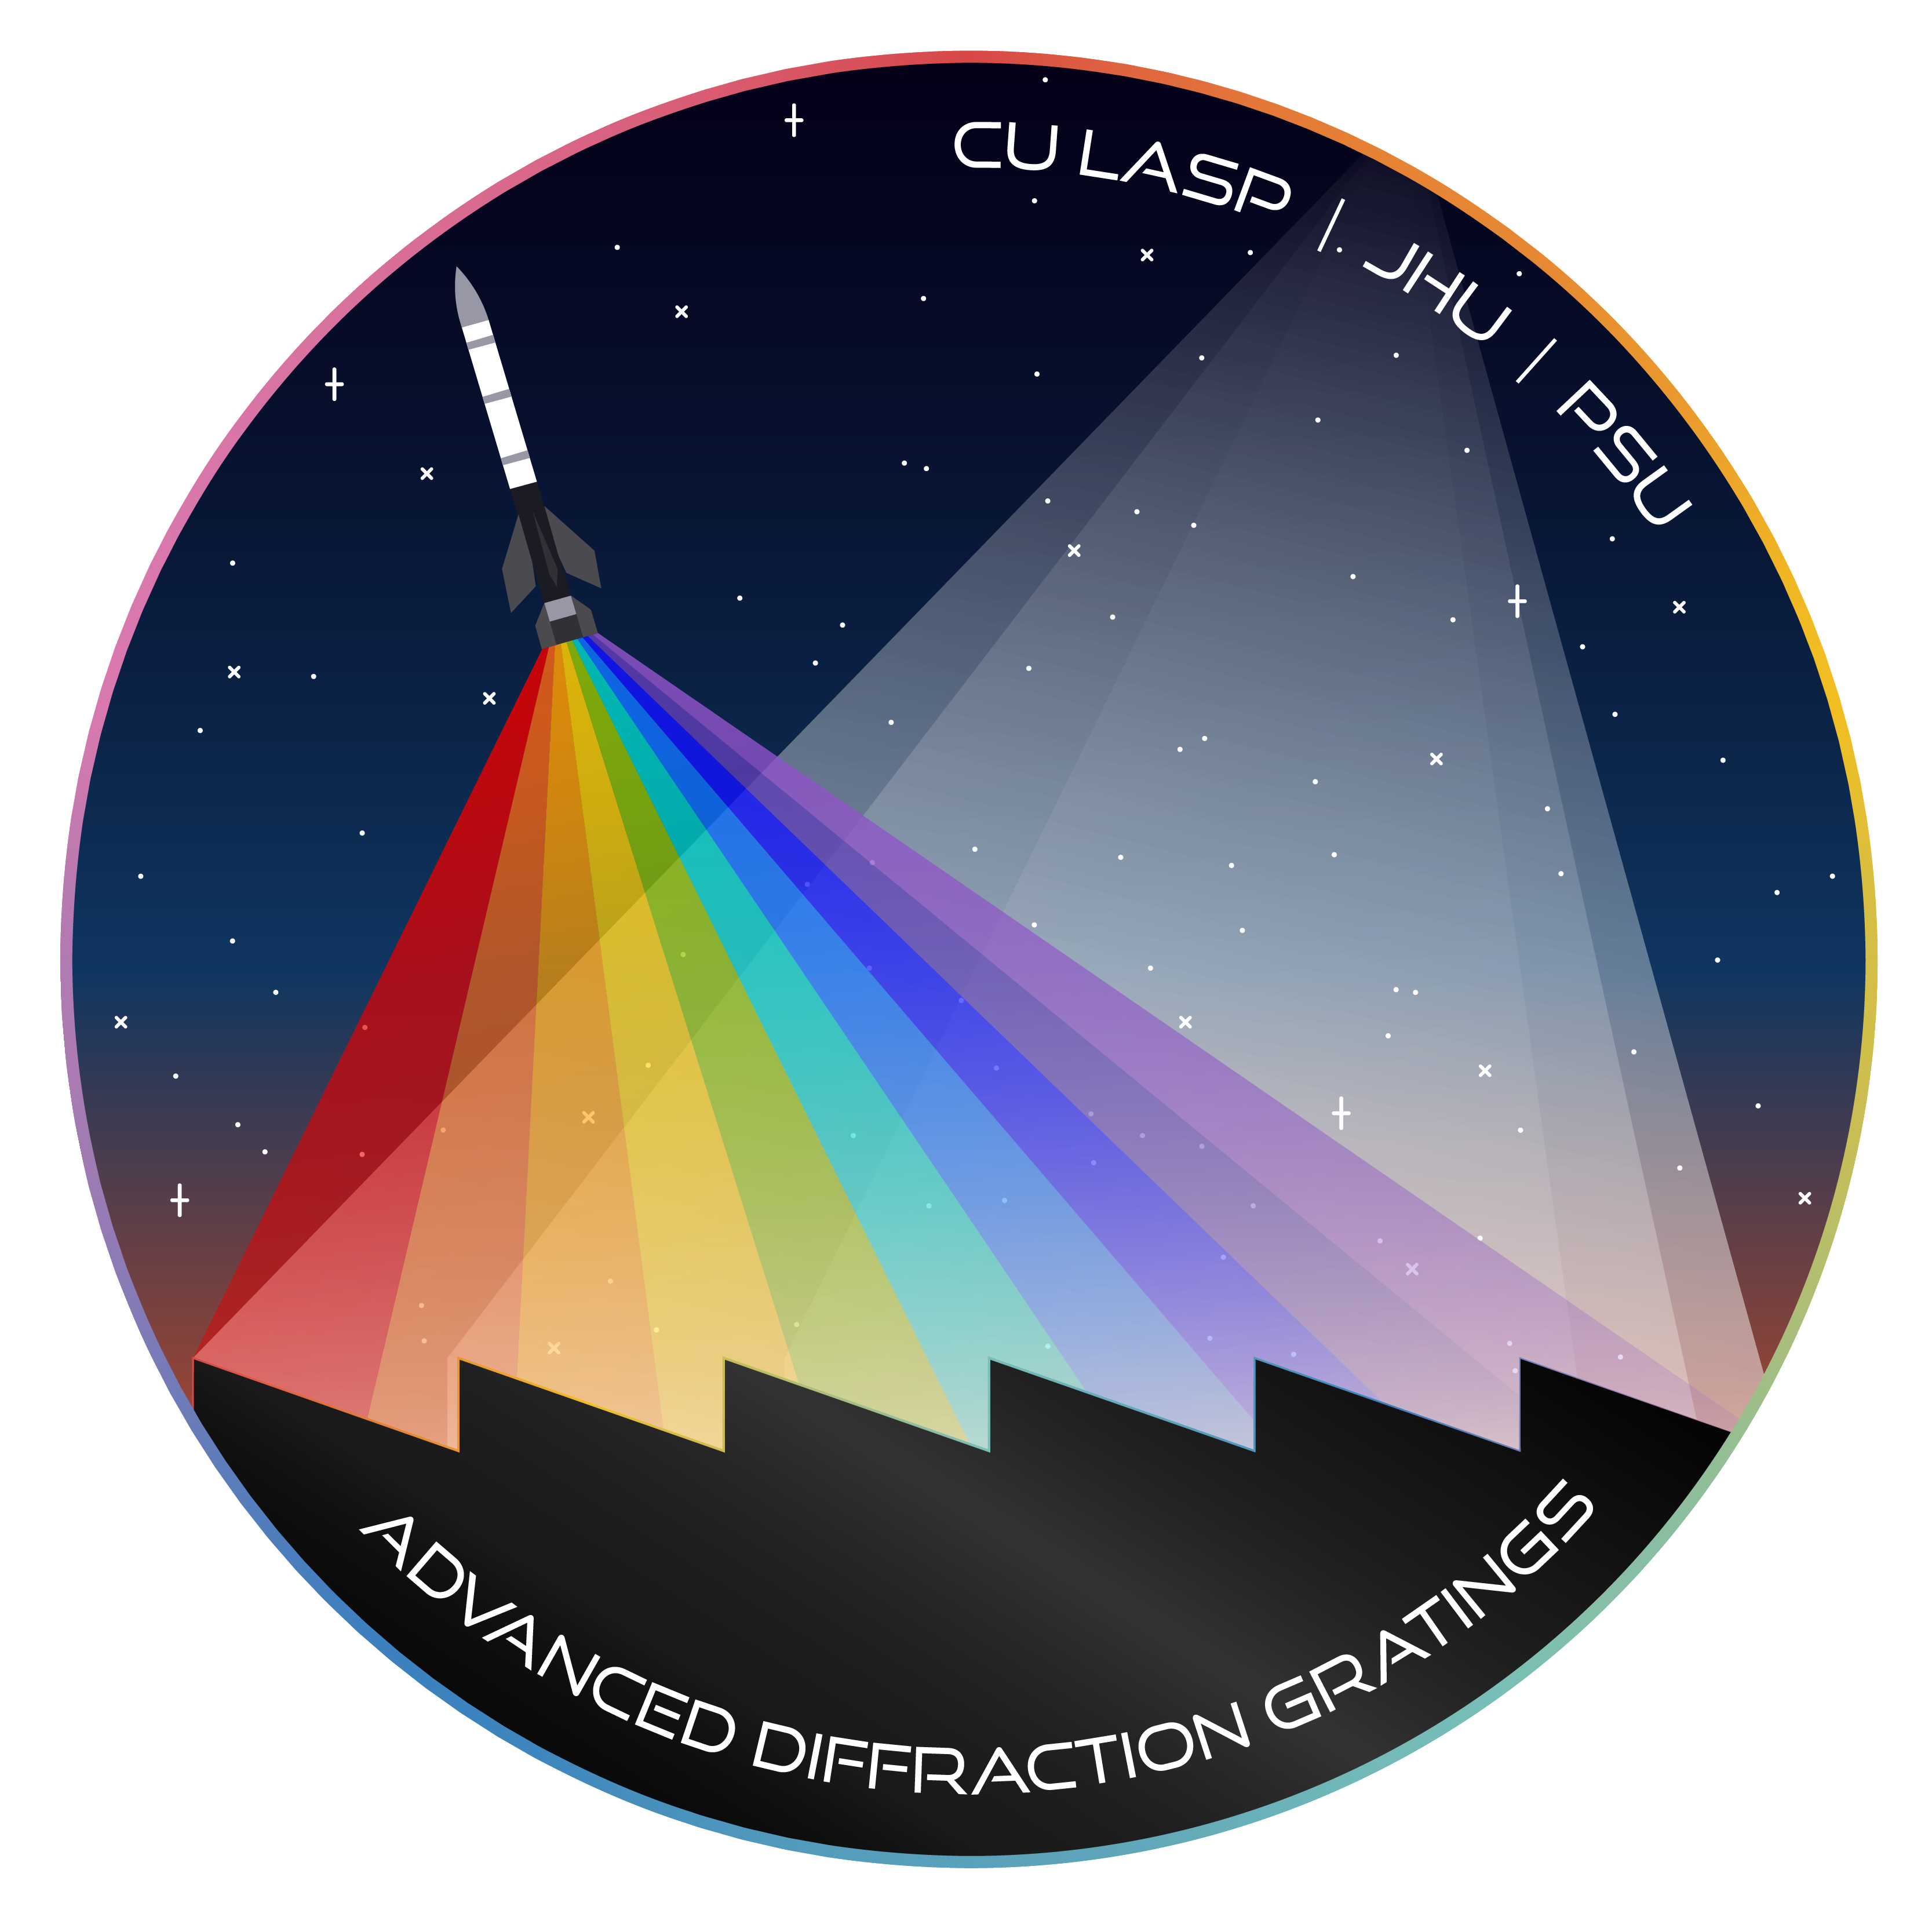 Diffraction Gratings Logo